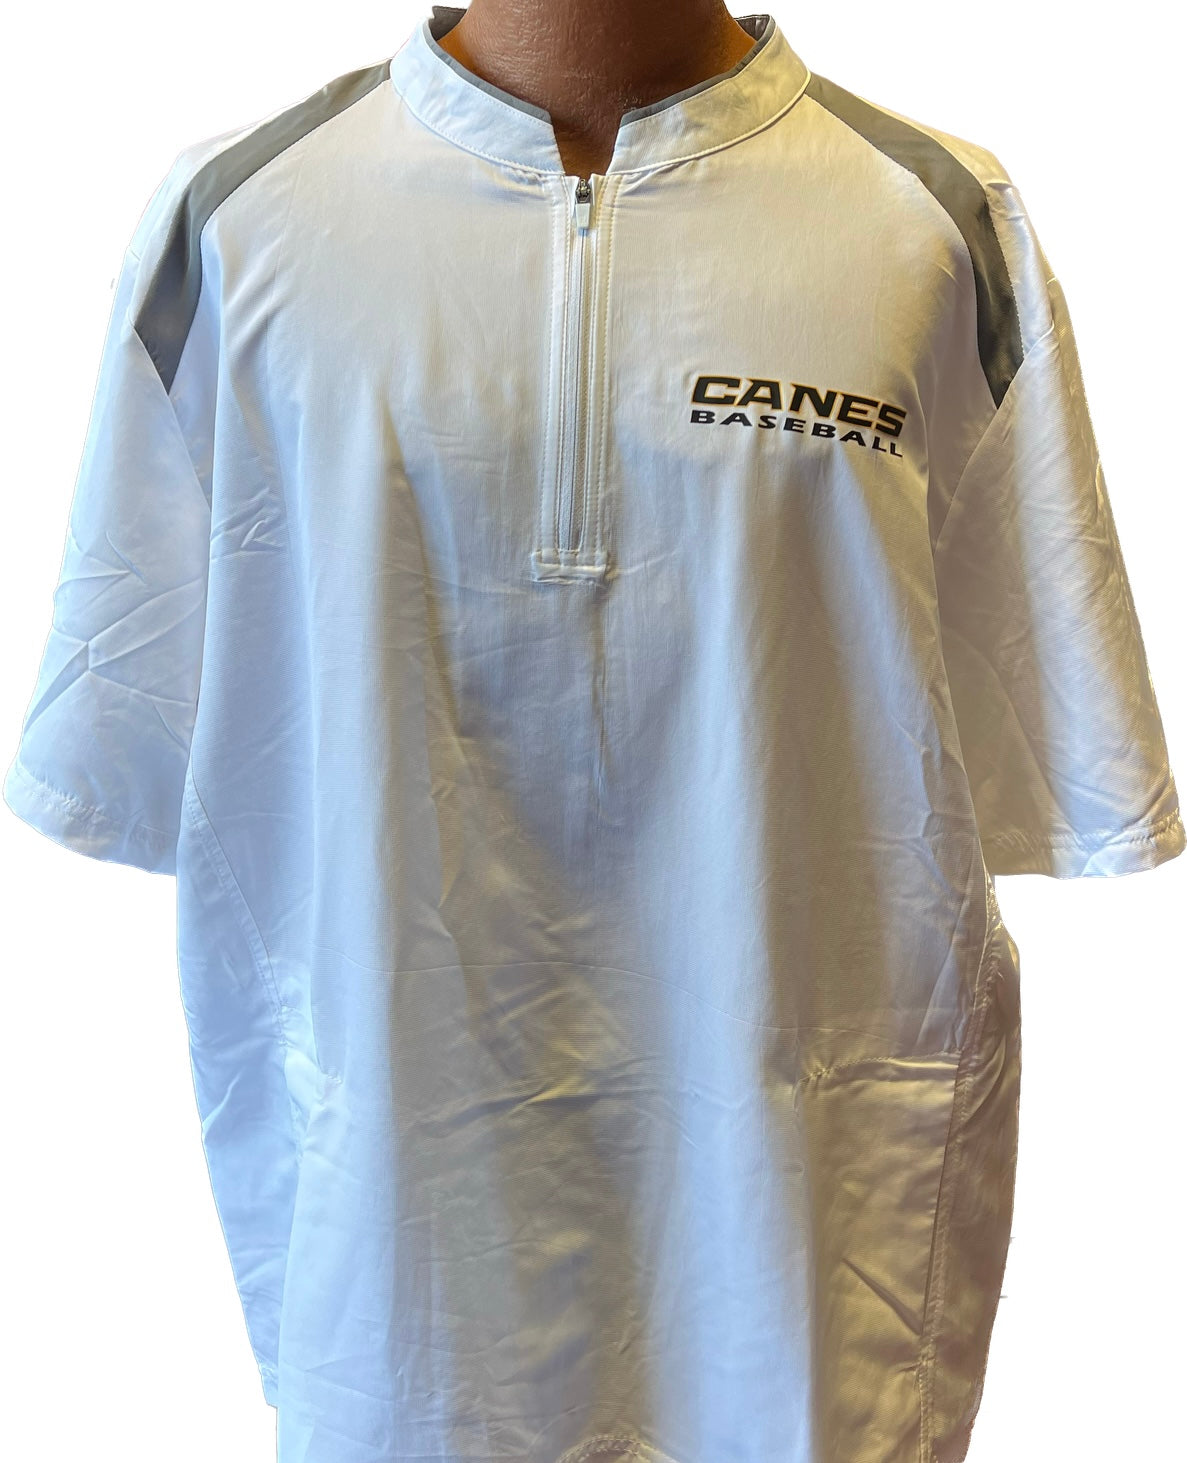 Hollowell Canes Baseball Short Sleeve Pullover- White/Grey